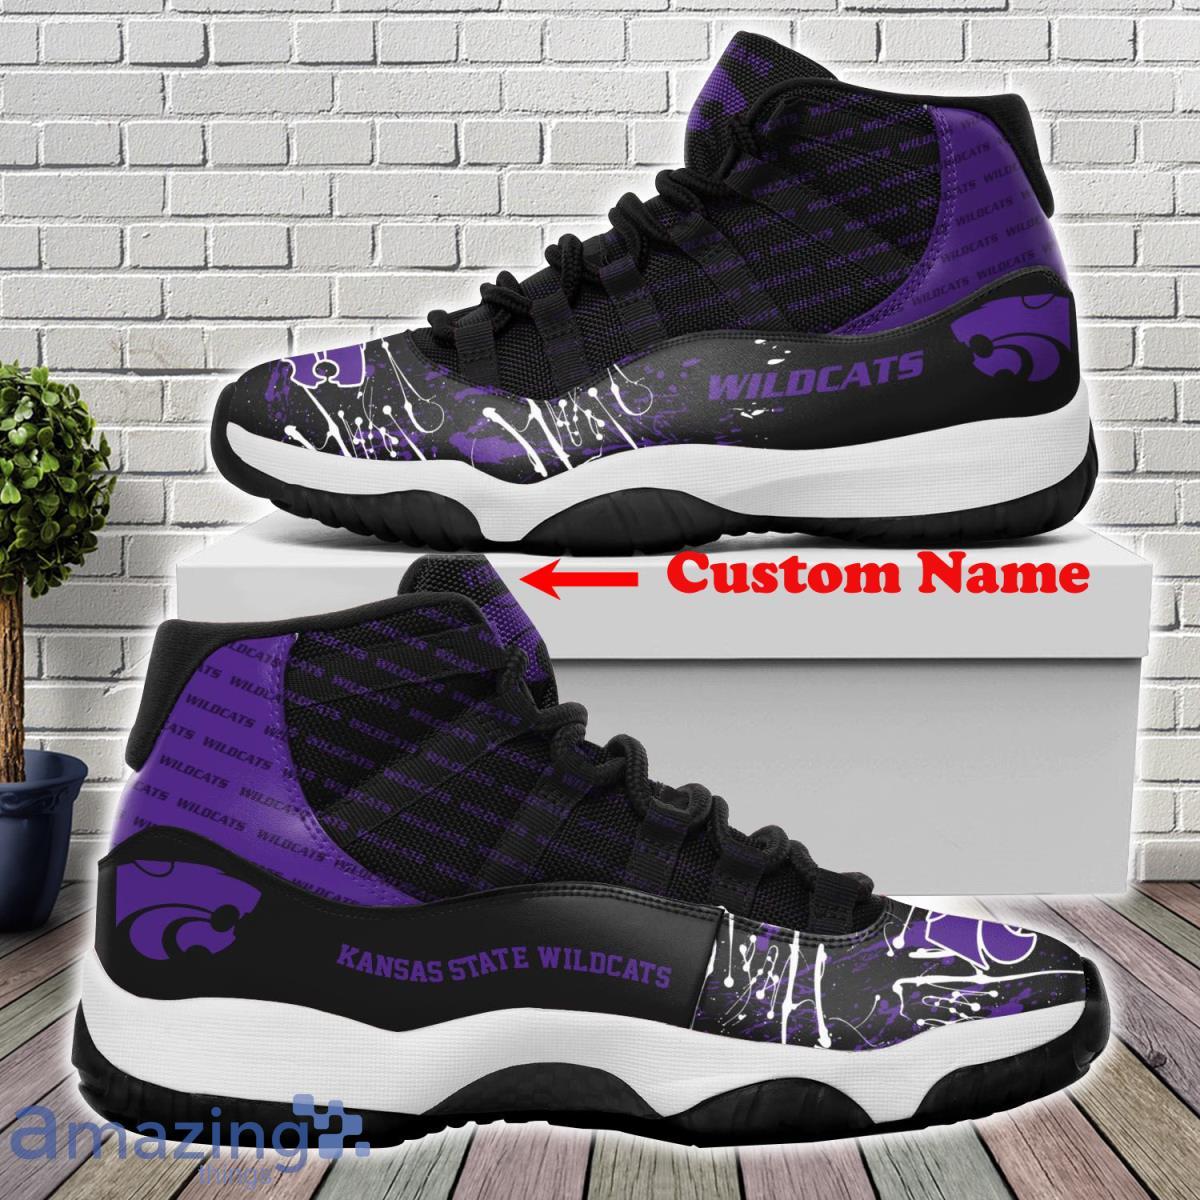 Kansas State Wildcats Football Team Air Jordan 11 Custom Name Sneakers For Fans Product Photo 1